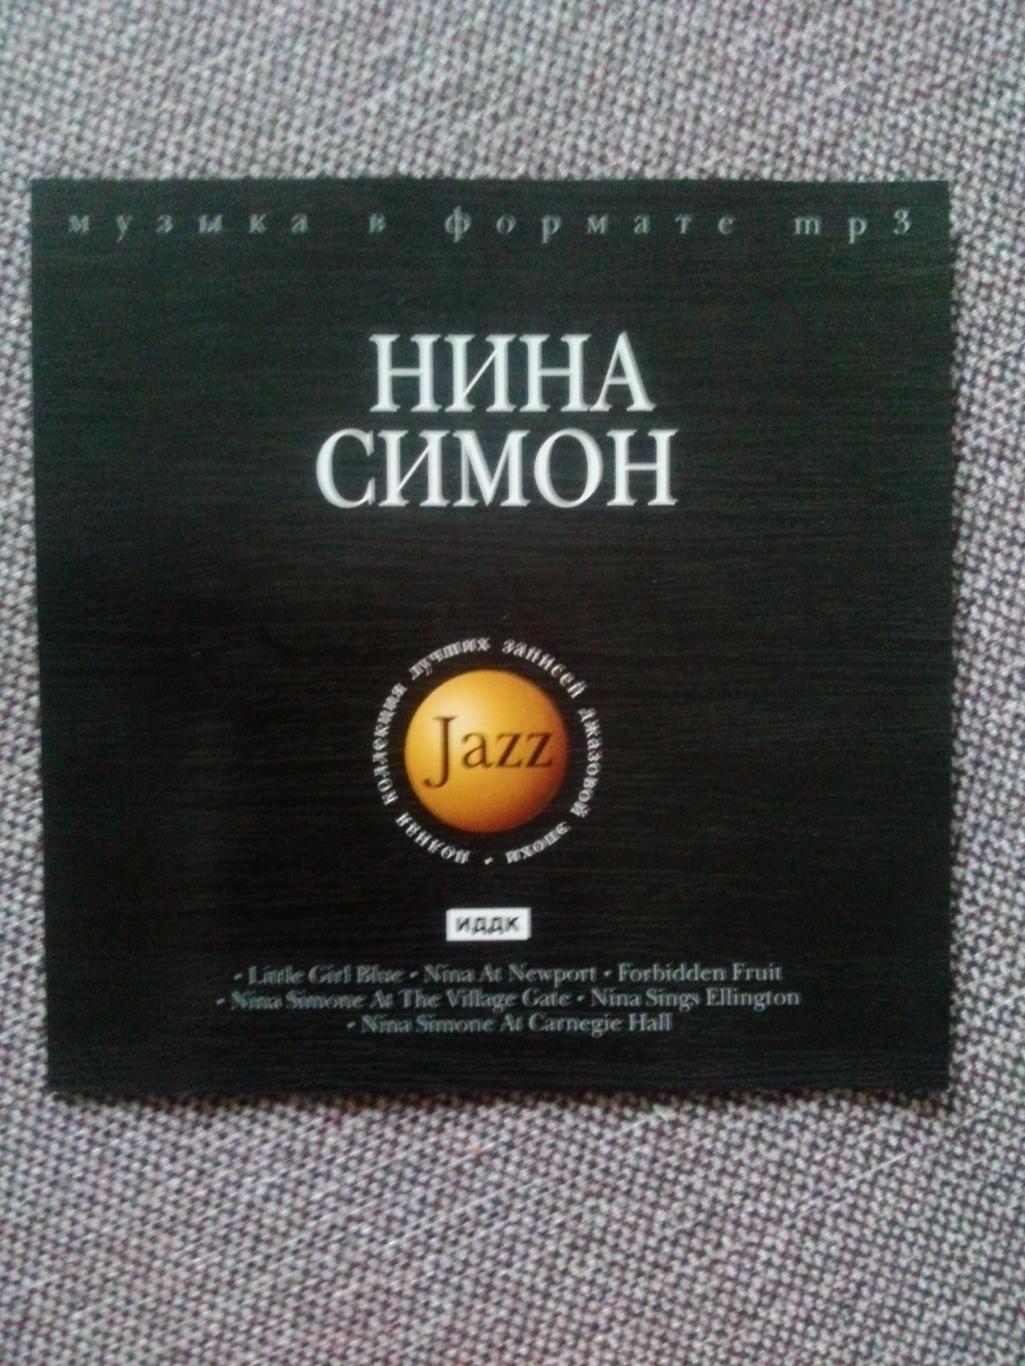 MP - 3 CD диск : Нина Симон (Nina Simone) 1958 - 1963 гг. (6 альбомов) Джаз-блюз